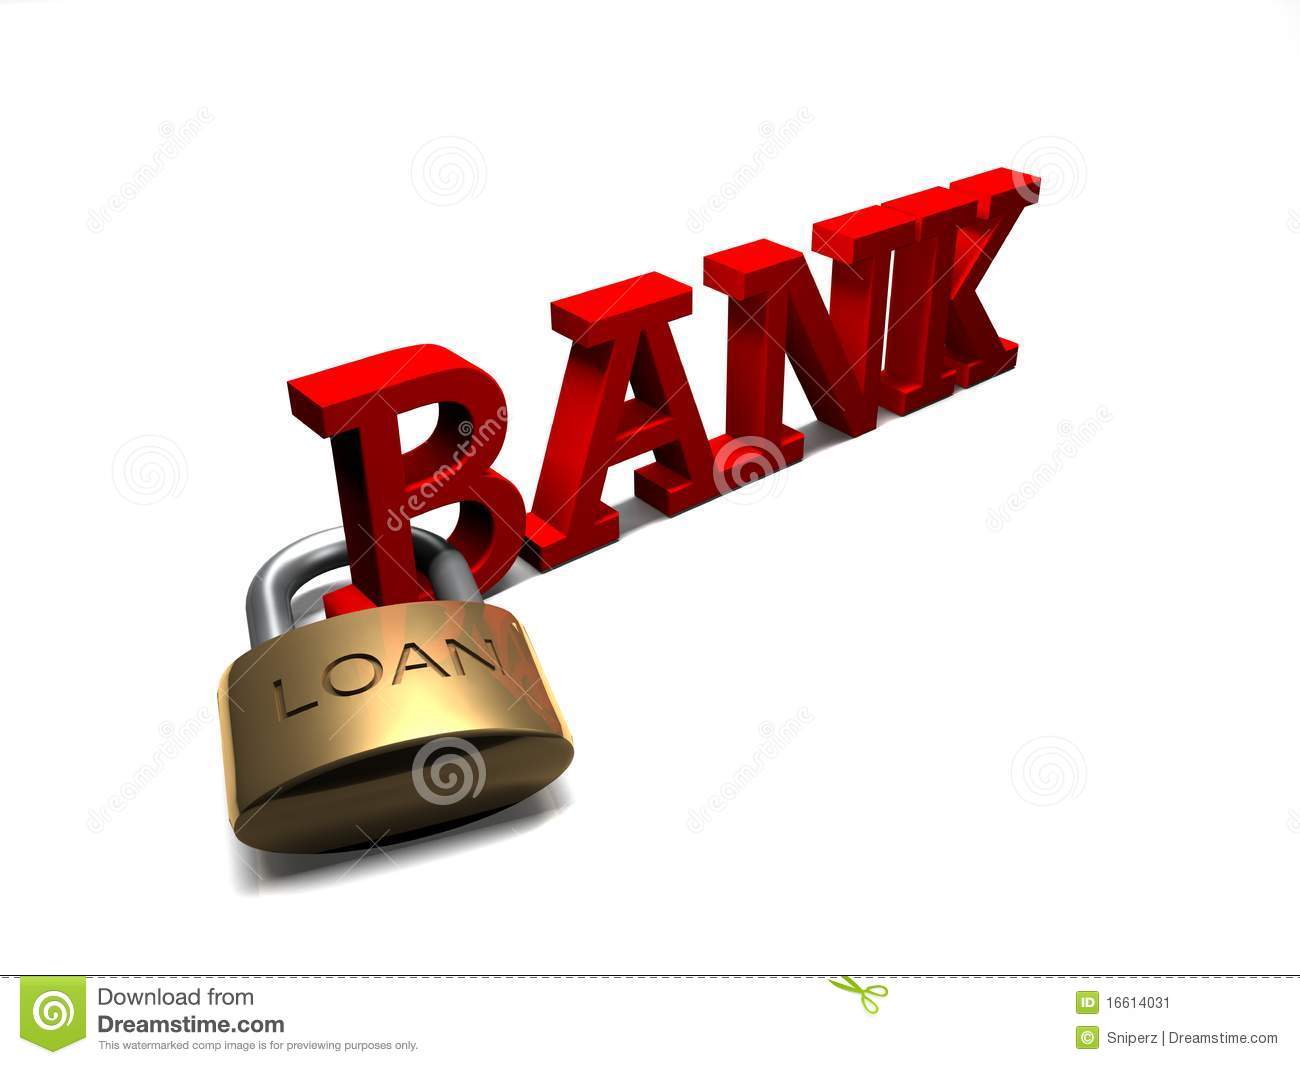 Bank Loan Stock Image   Image  16614031